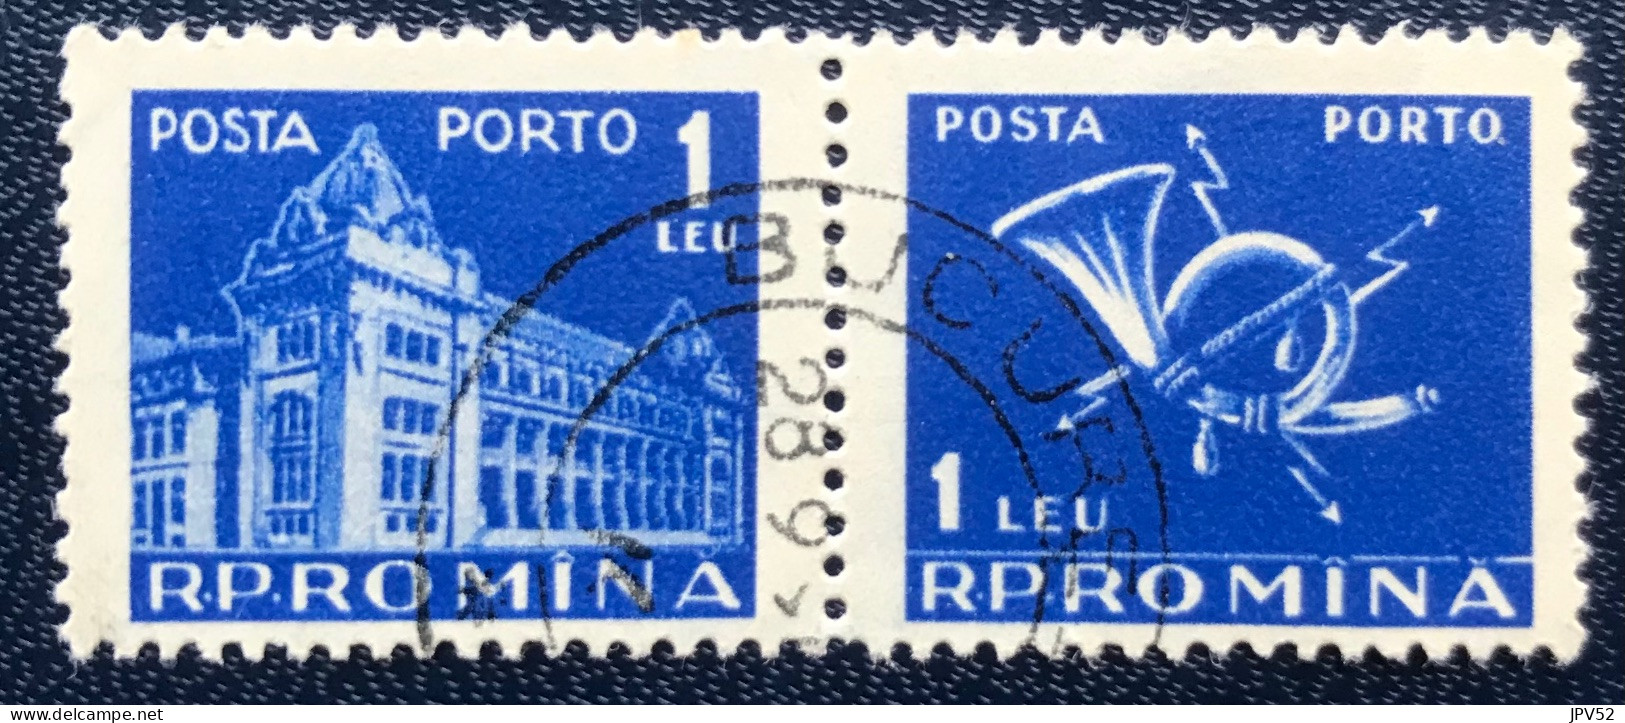 Romana - Roemenië - C14/54 - 1957 - (°)used - Michel 106 - Postkantoor & Posthoorn & Bliksems - Strafport